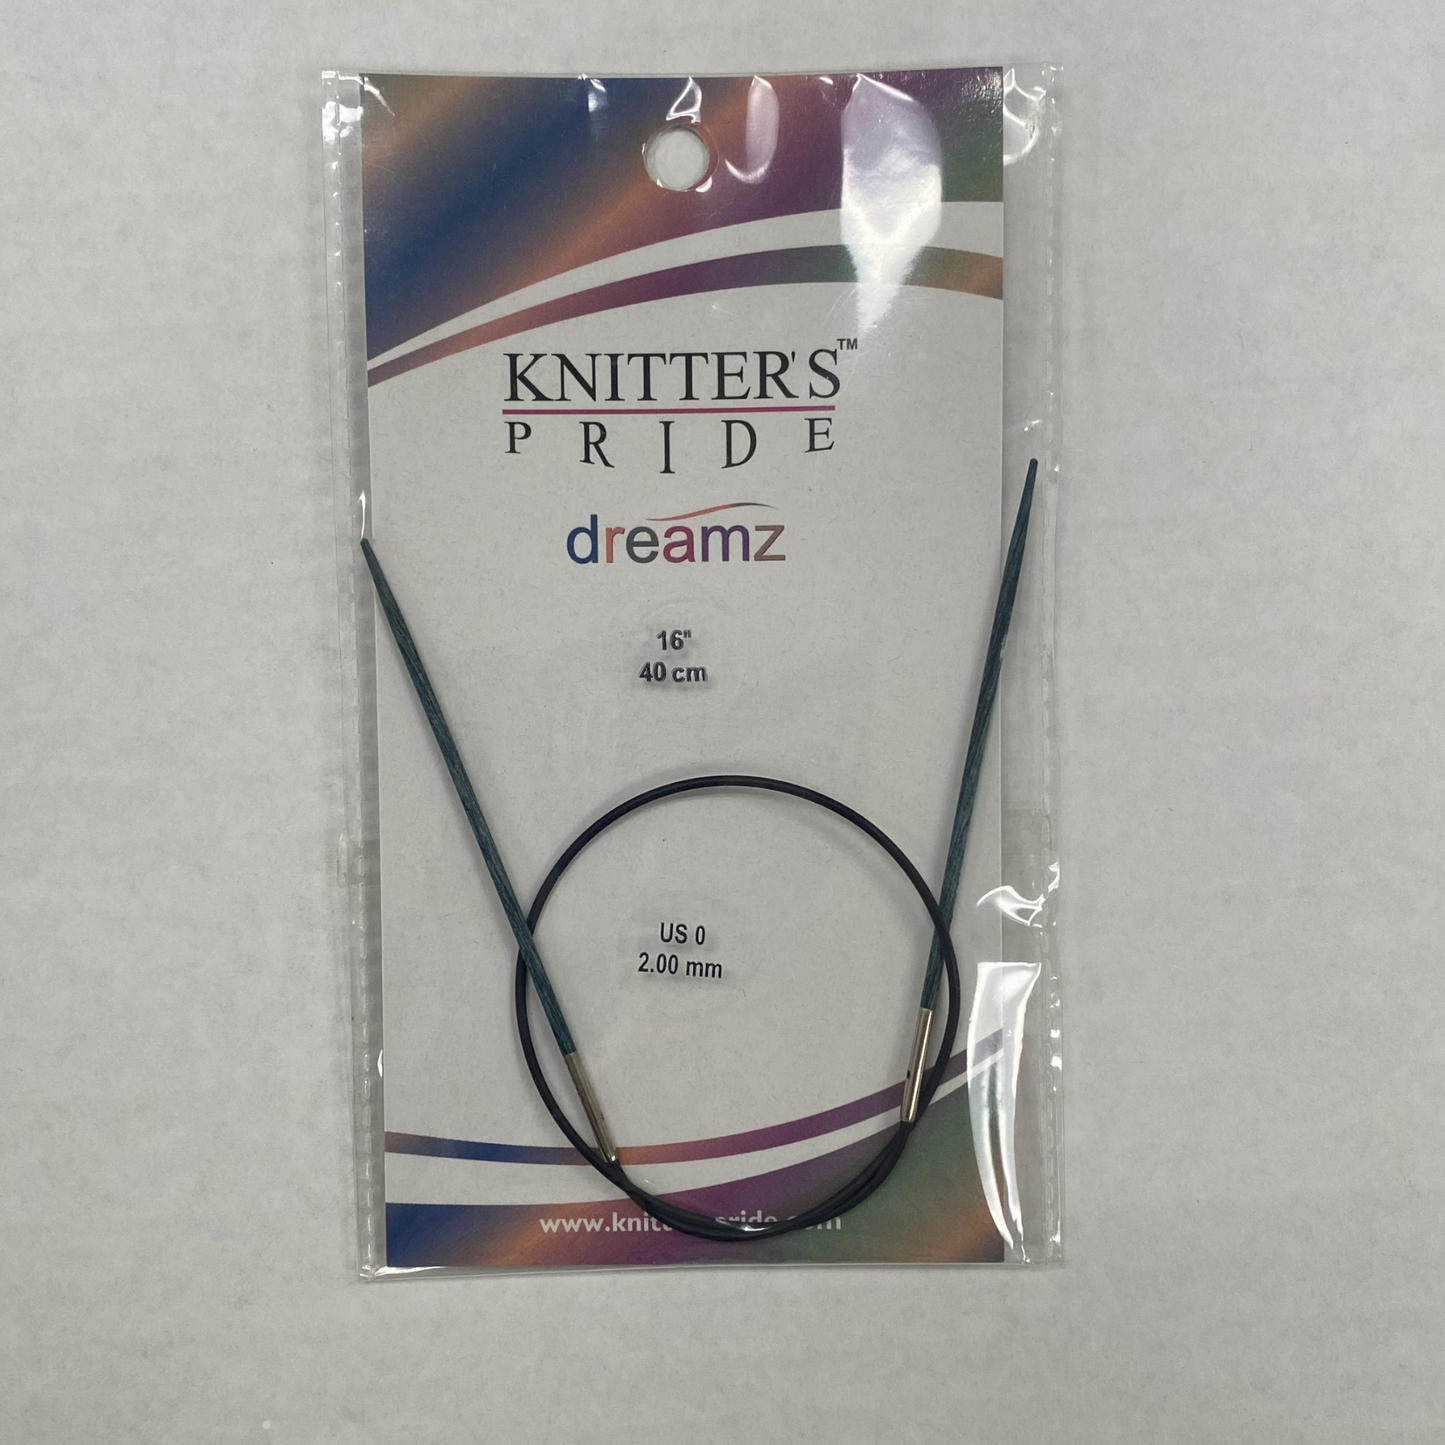 Knitter's Pride - Dreamz - US 0 / 2.00mm Fixed Circular Needles